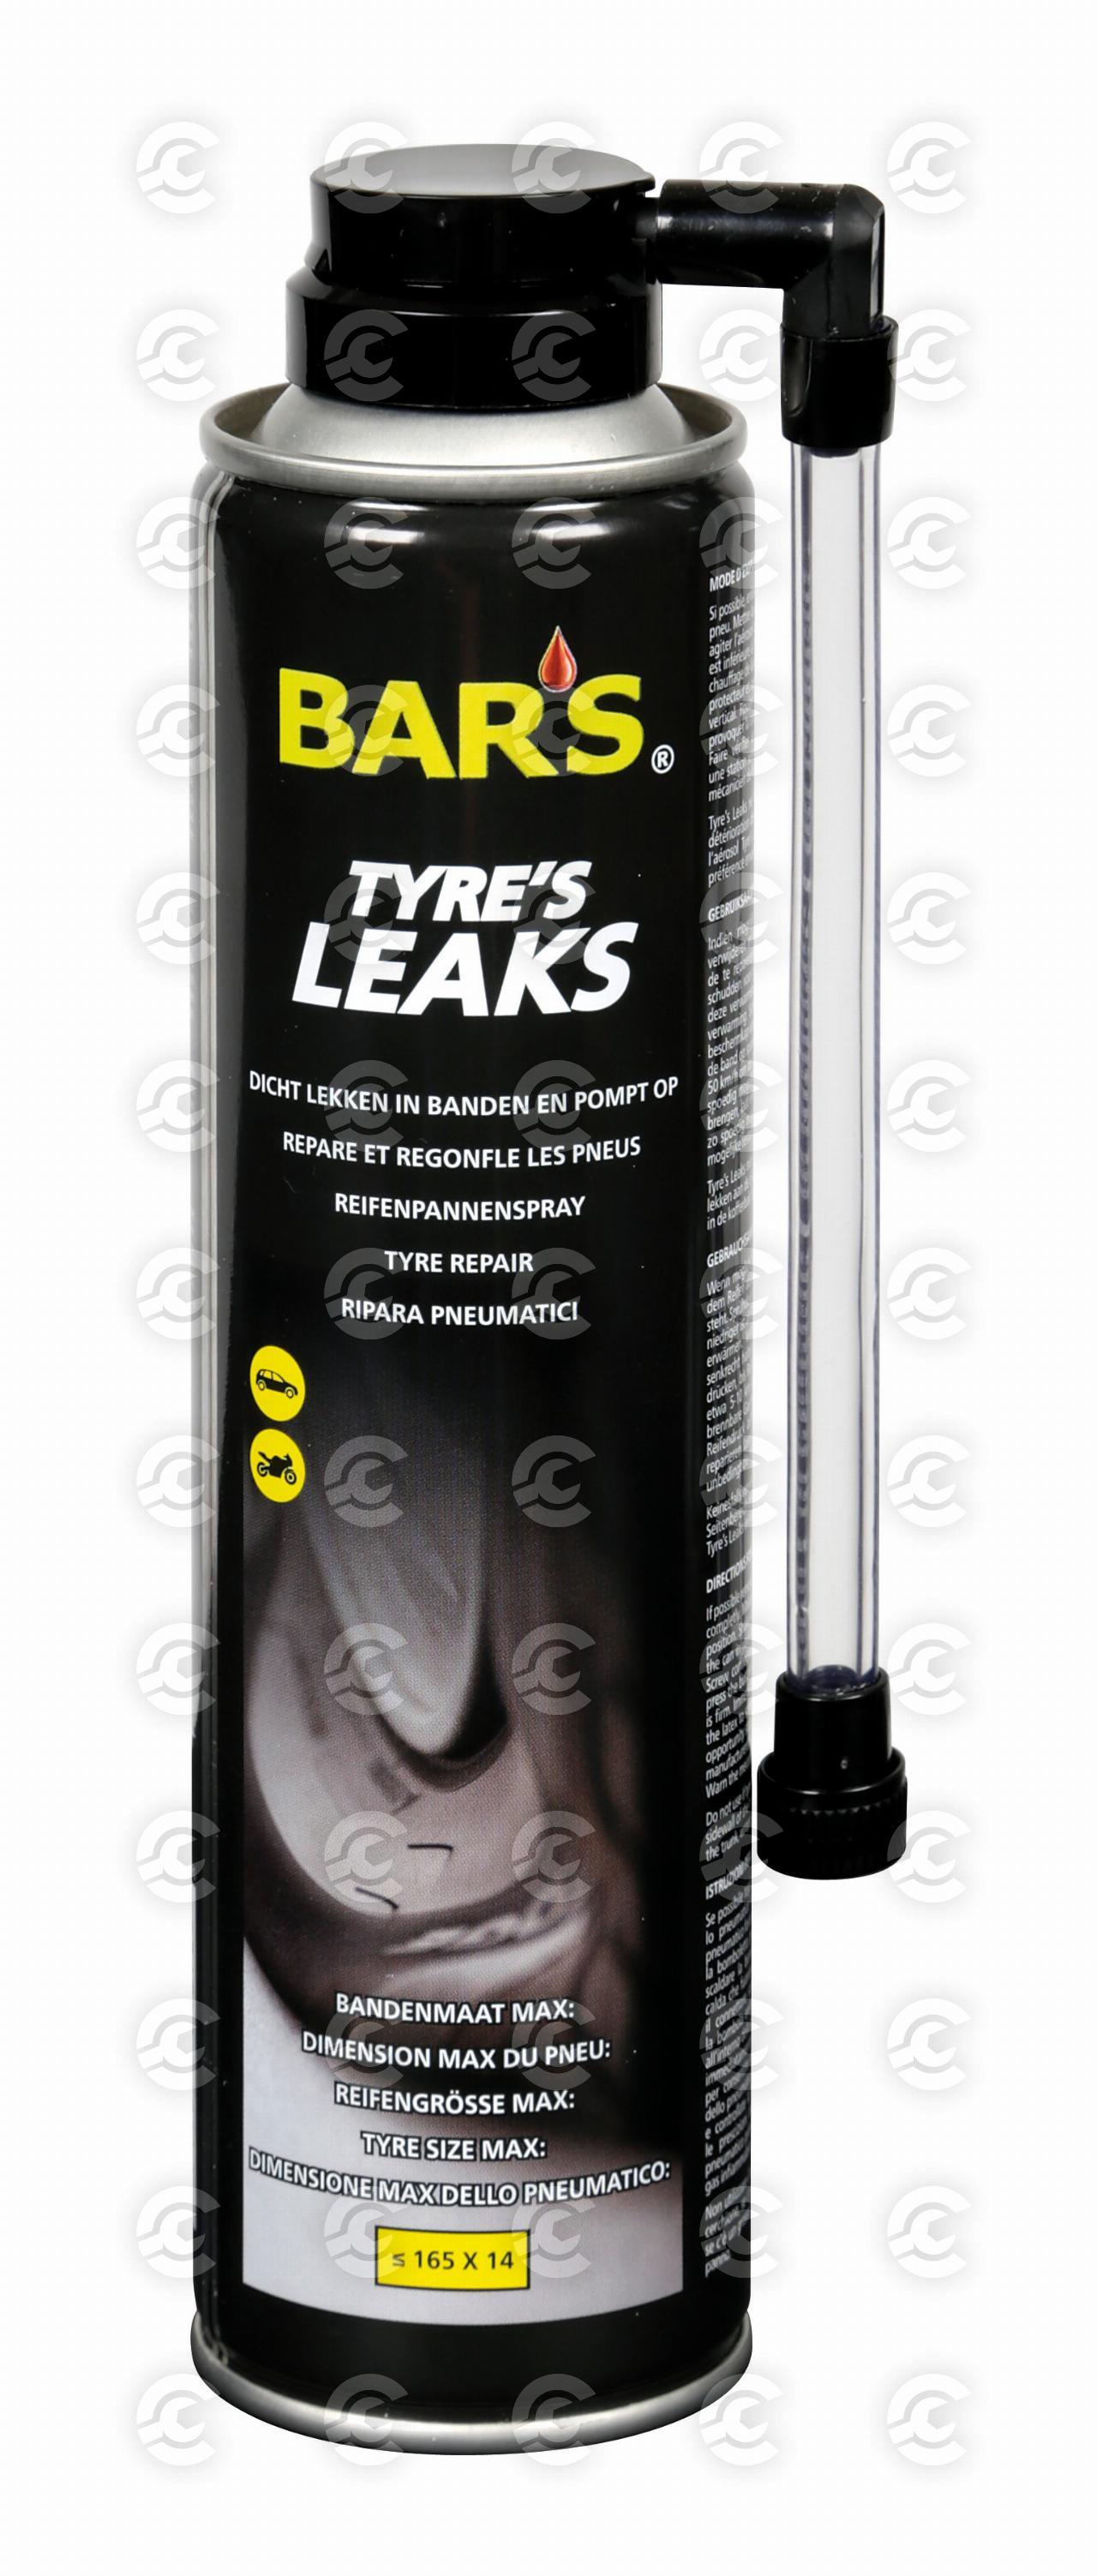 Bars Tyre’s Leaks, gonfia e ripara pneumatici - 300 ml